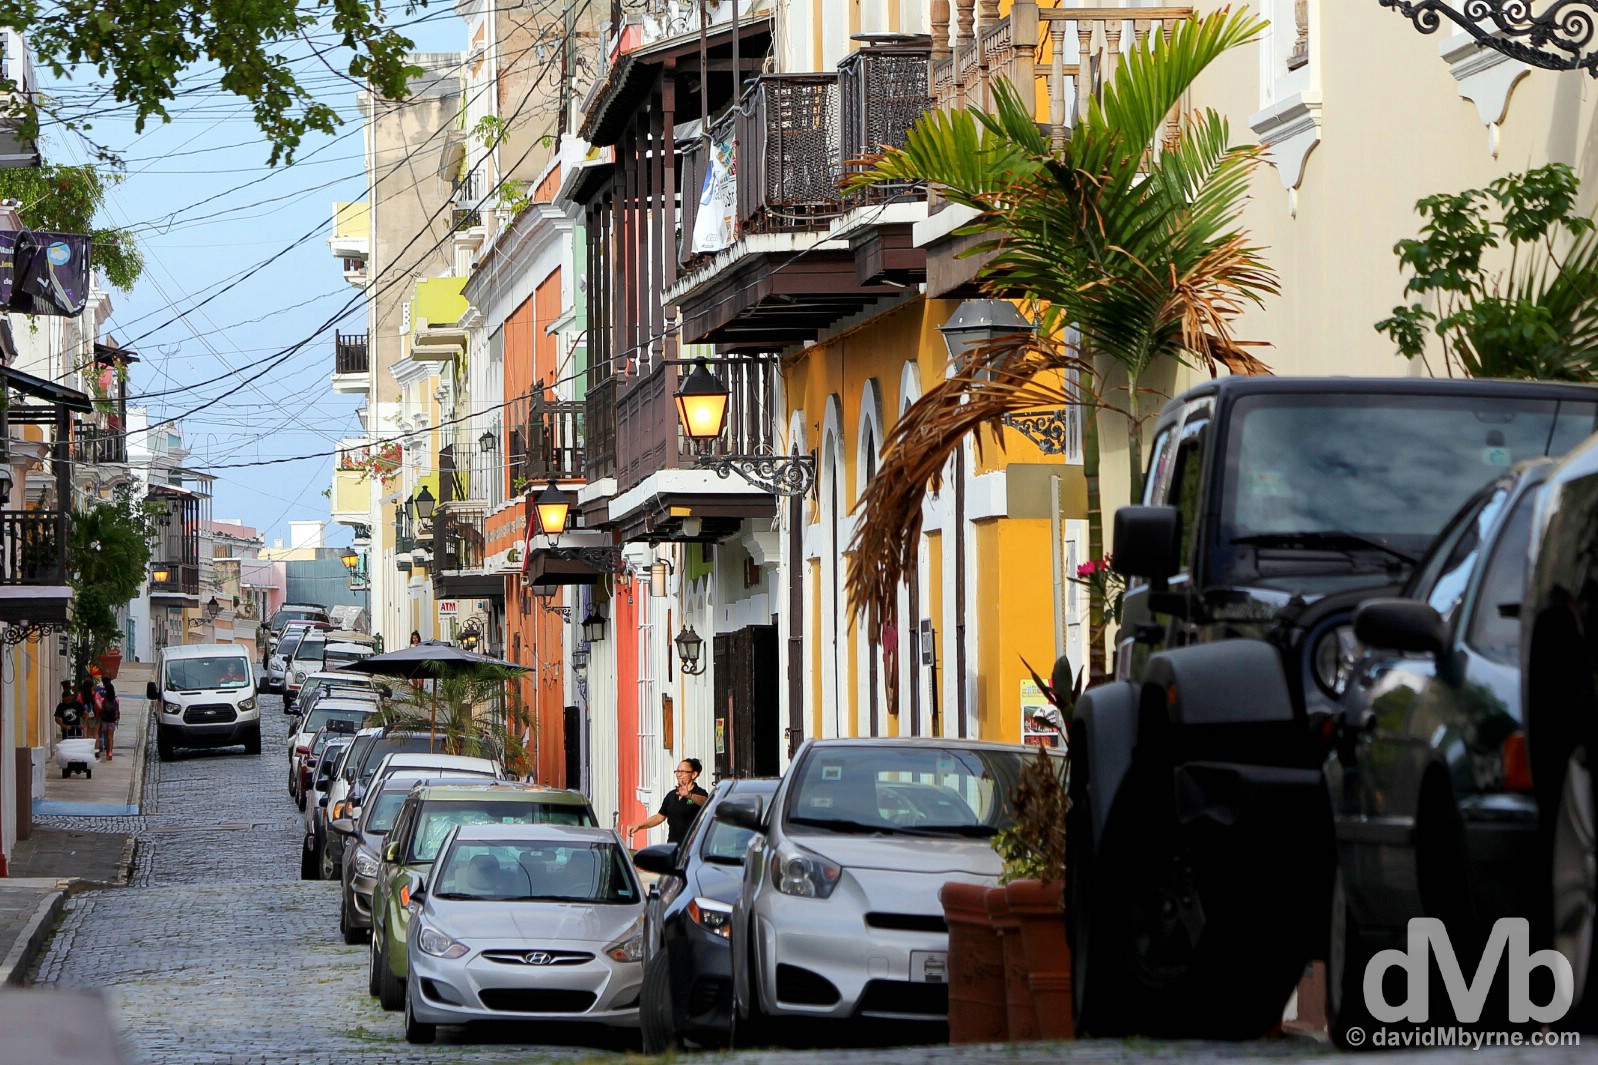 Calle de San Sabastian in Old San Juan, Puerto Rico, Greater Antilles. June 2, 2015. 